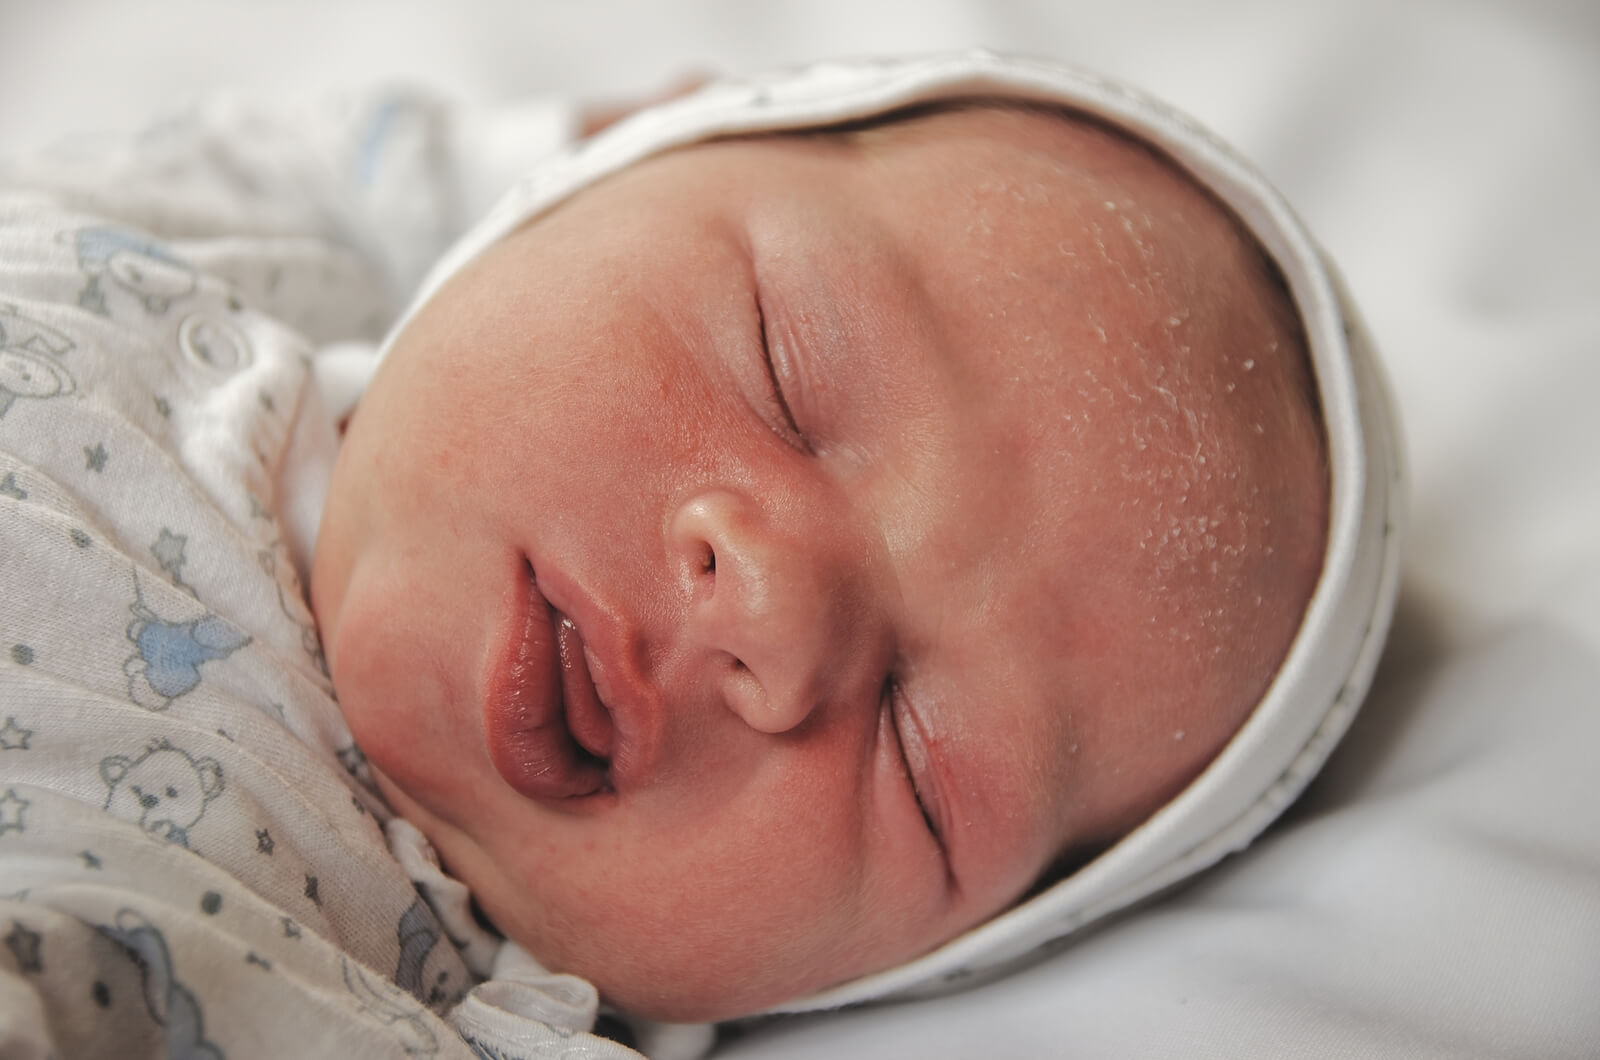 A newborn with cradle cap.